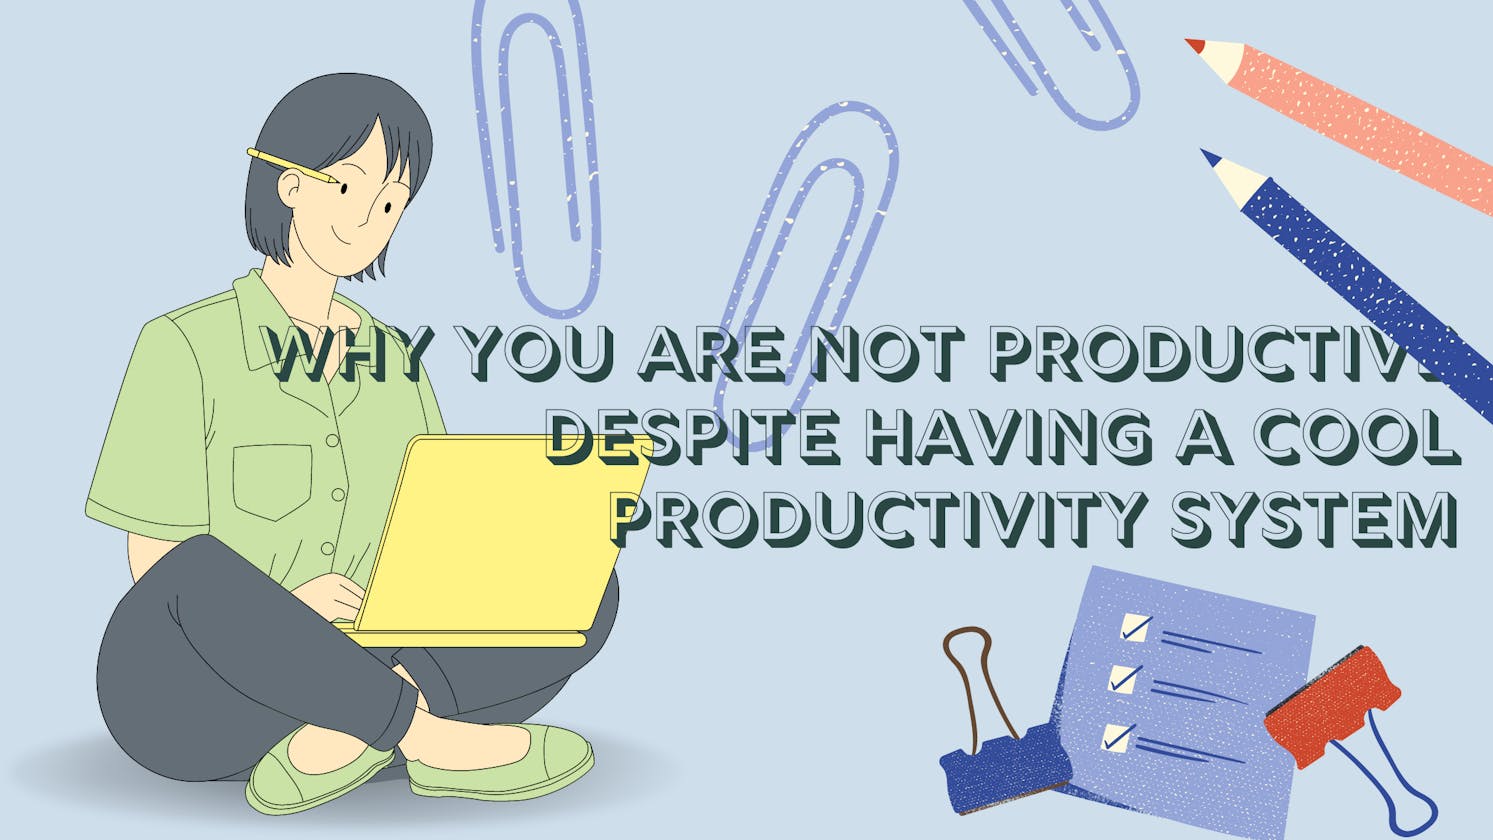 The Unproductive Productivity System